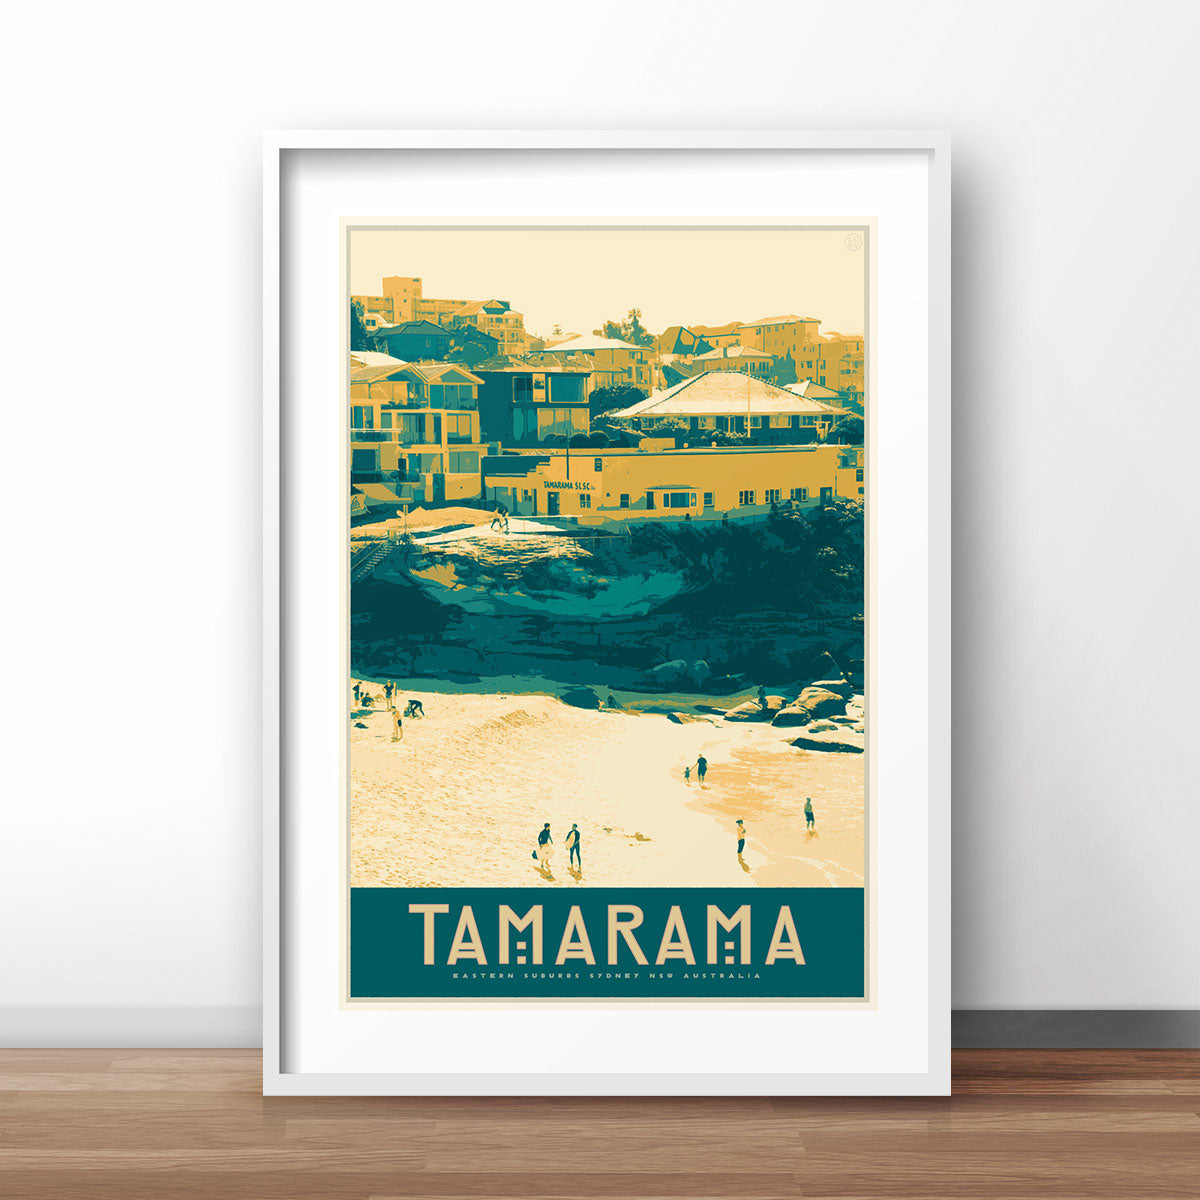 Tamarama Beach Sydney vintage retro poster print from Places We Luv